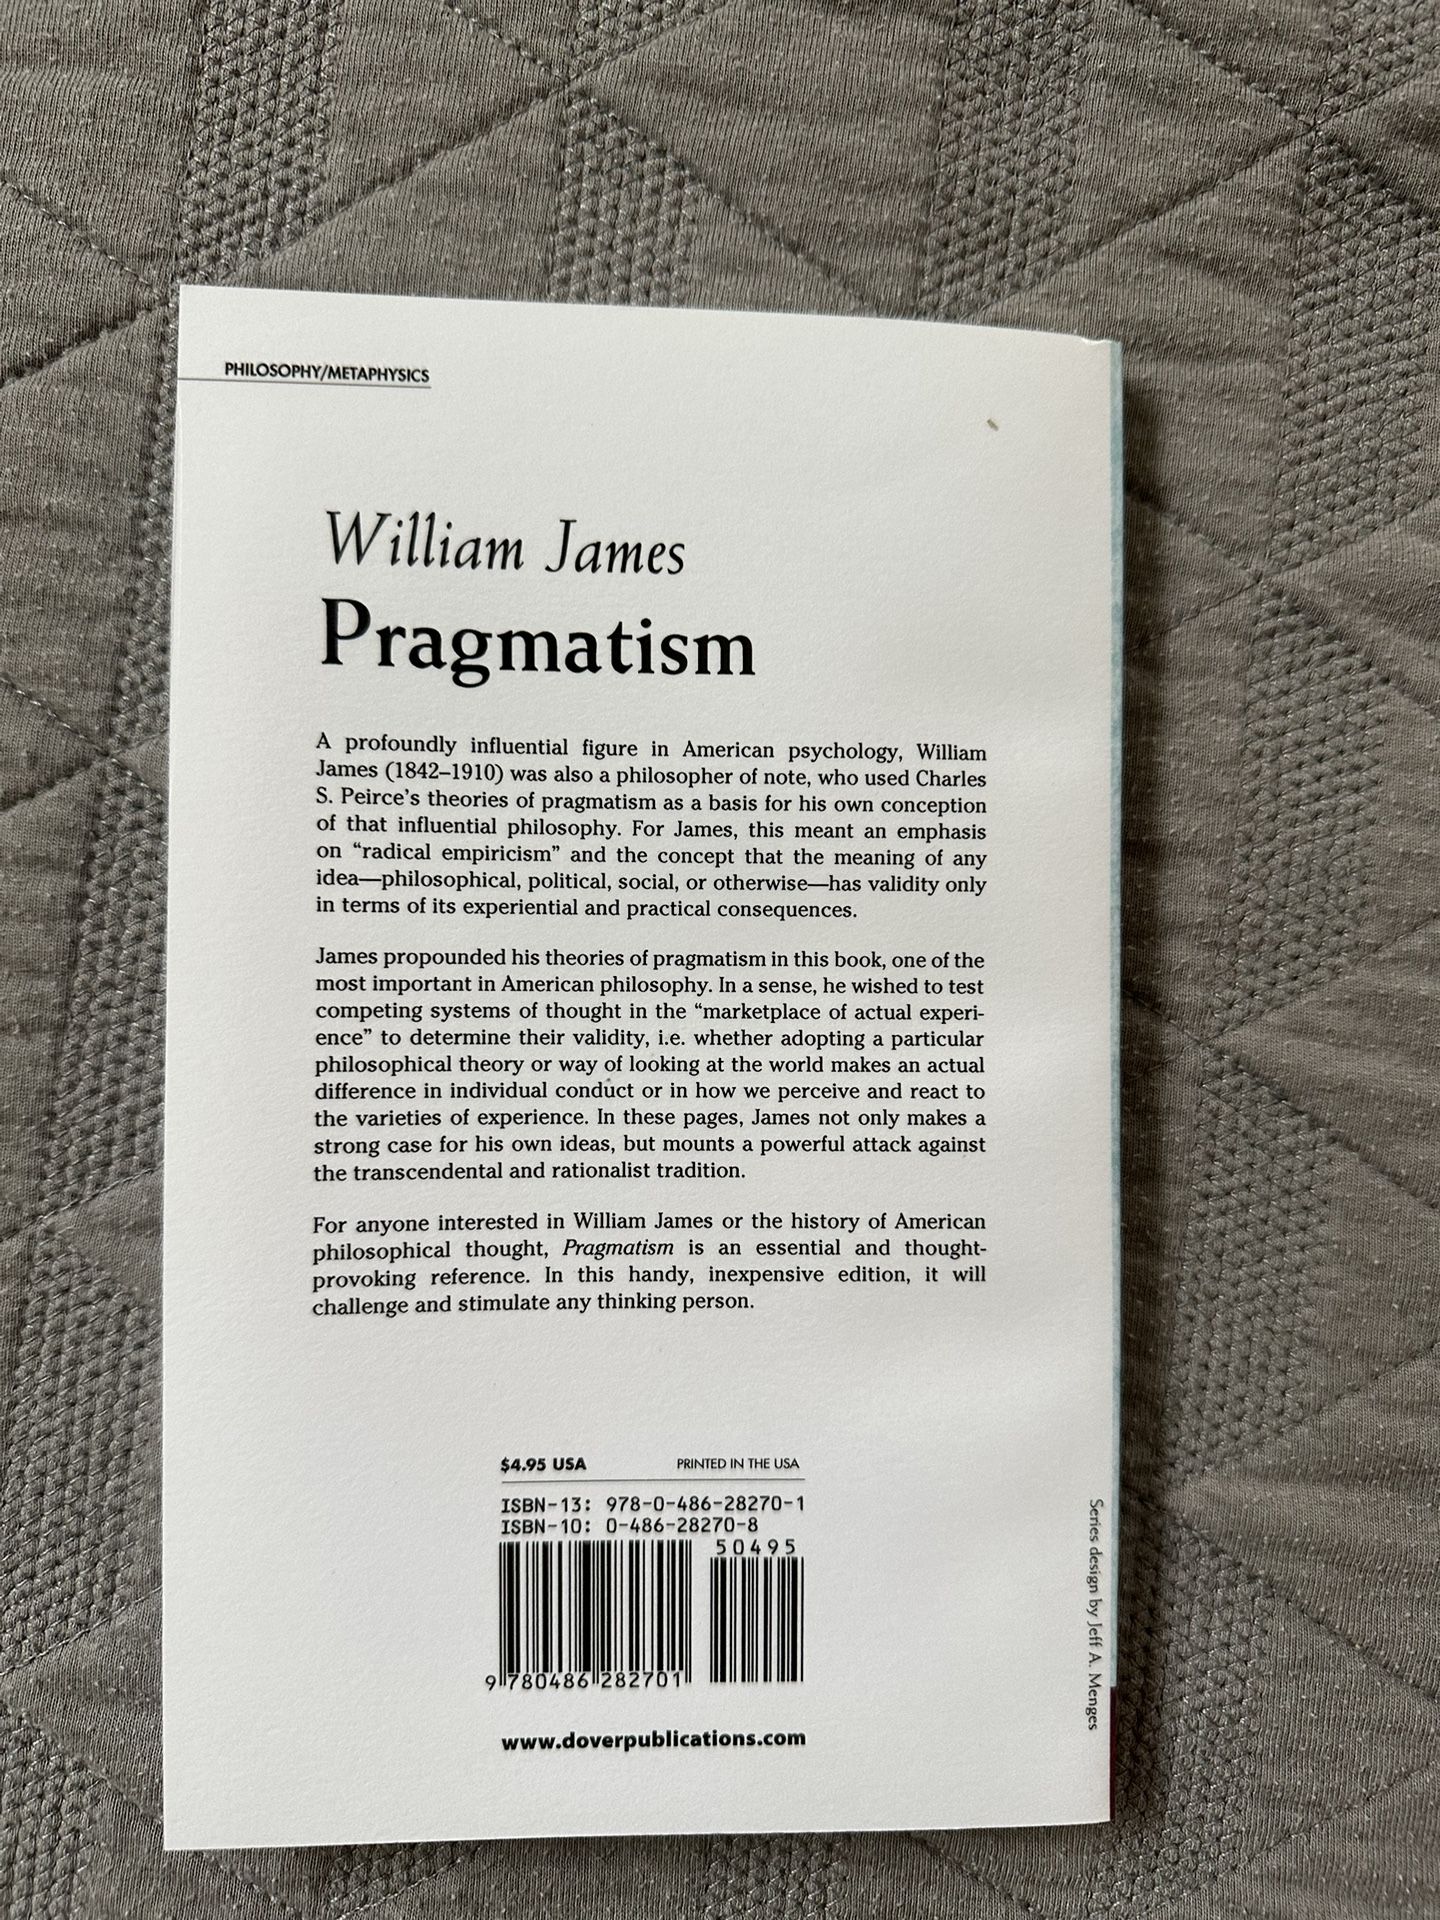 Pragmatism (by William James)